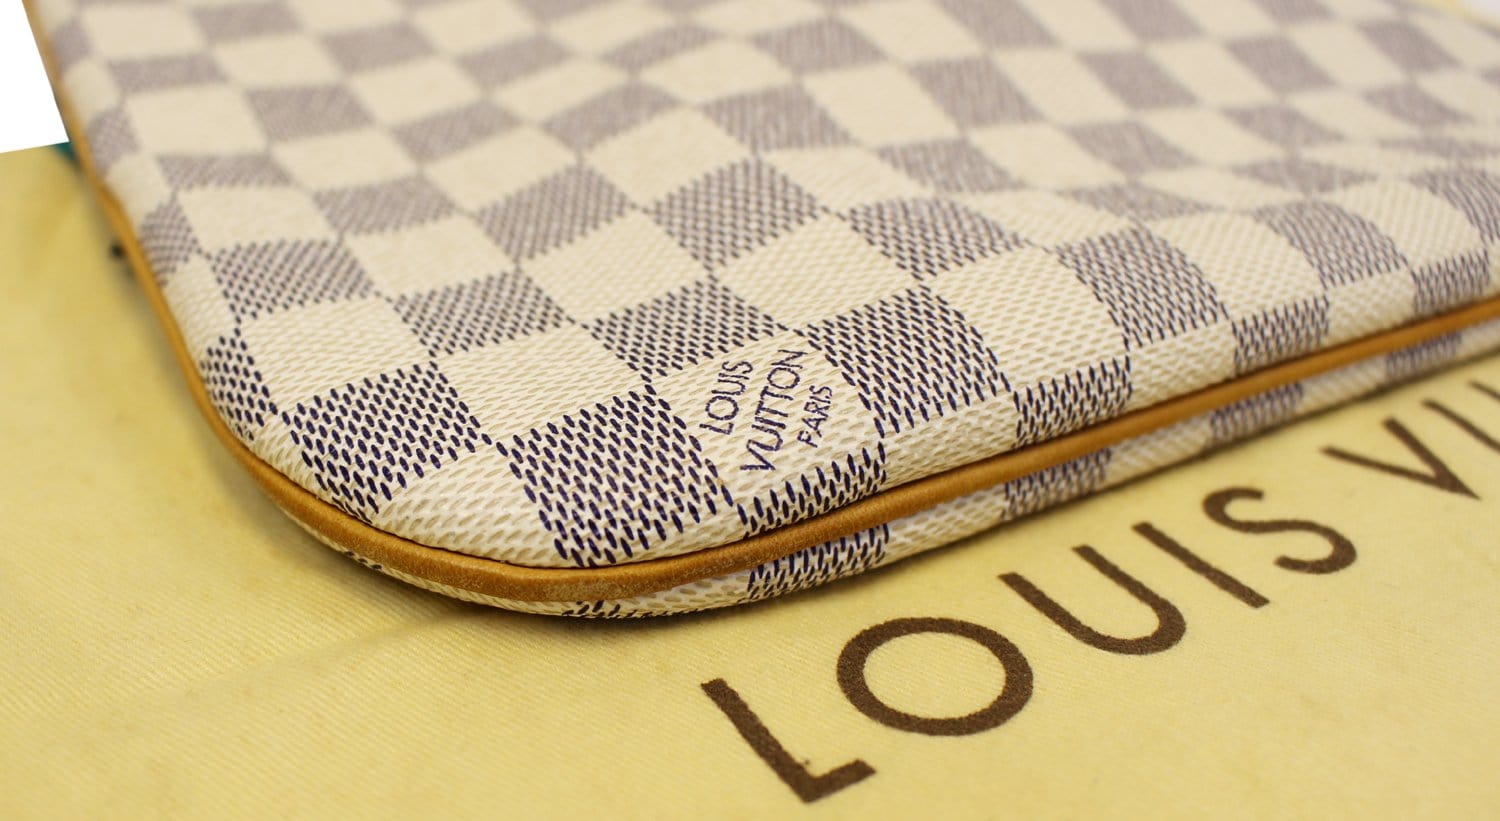 Louis Vuitton Damier Azur Pochette Bosphore Crossbody 860578